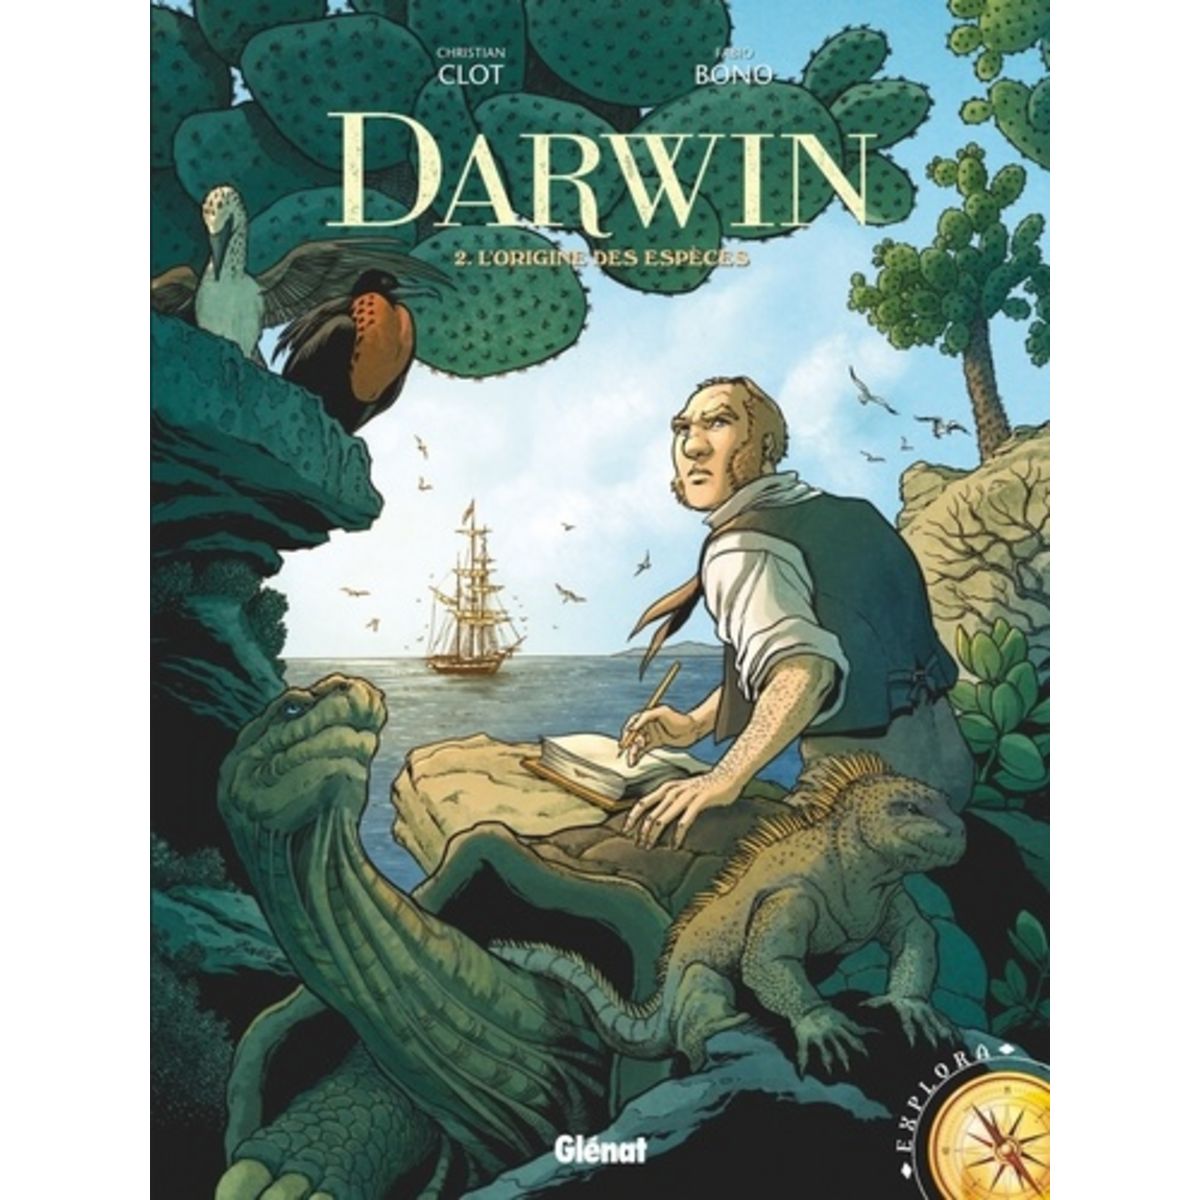  DARWIN TOME 2 : L'ORIGINE DES ESPECES, Clot Christian